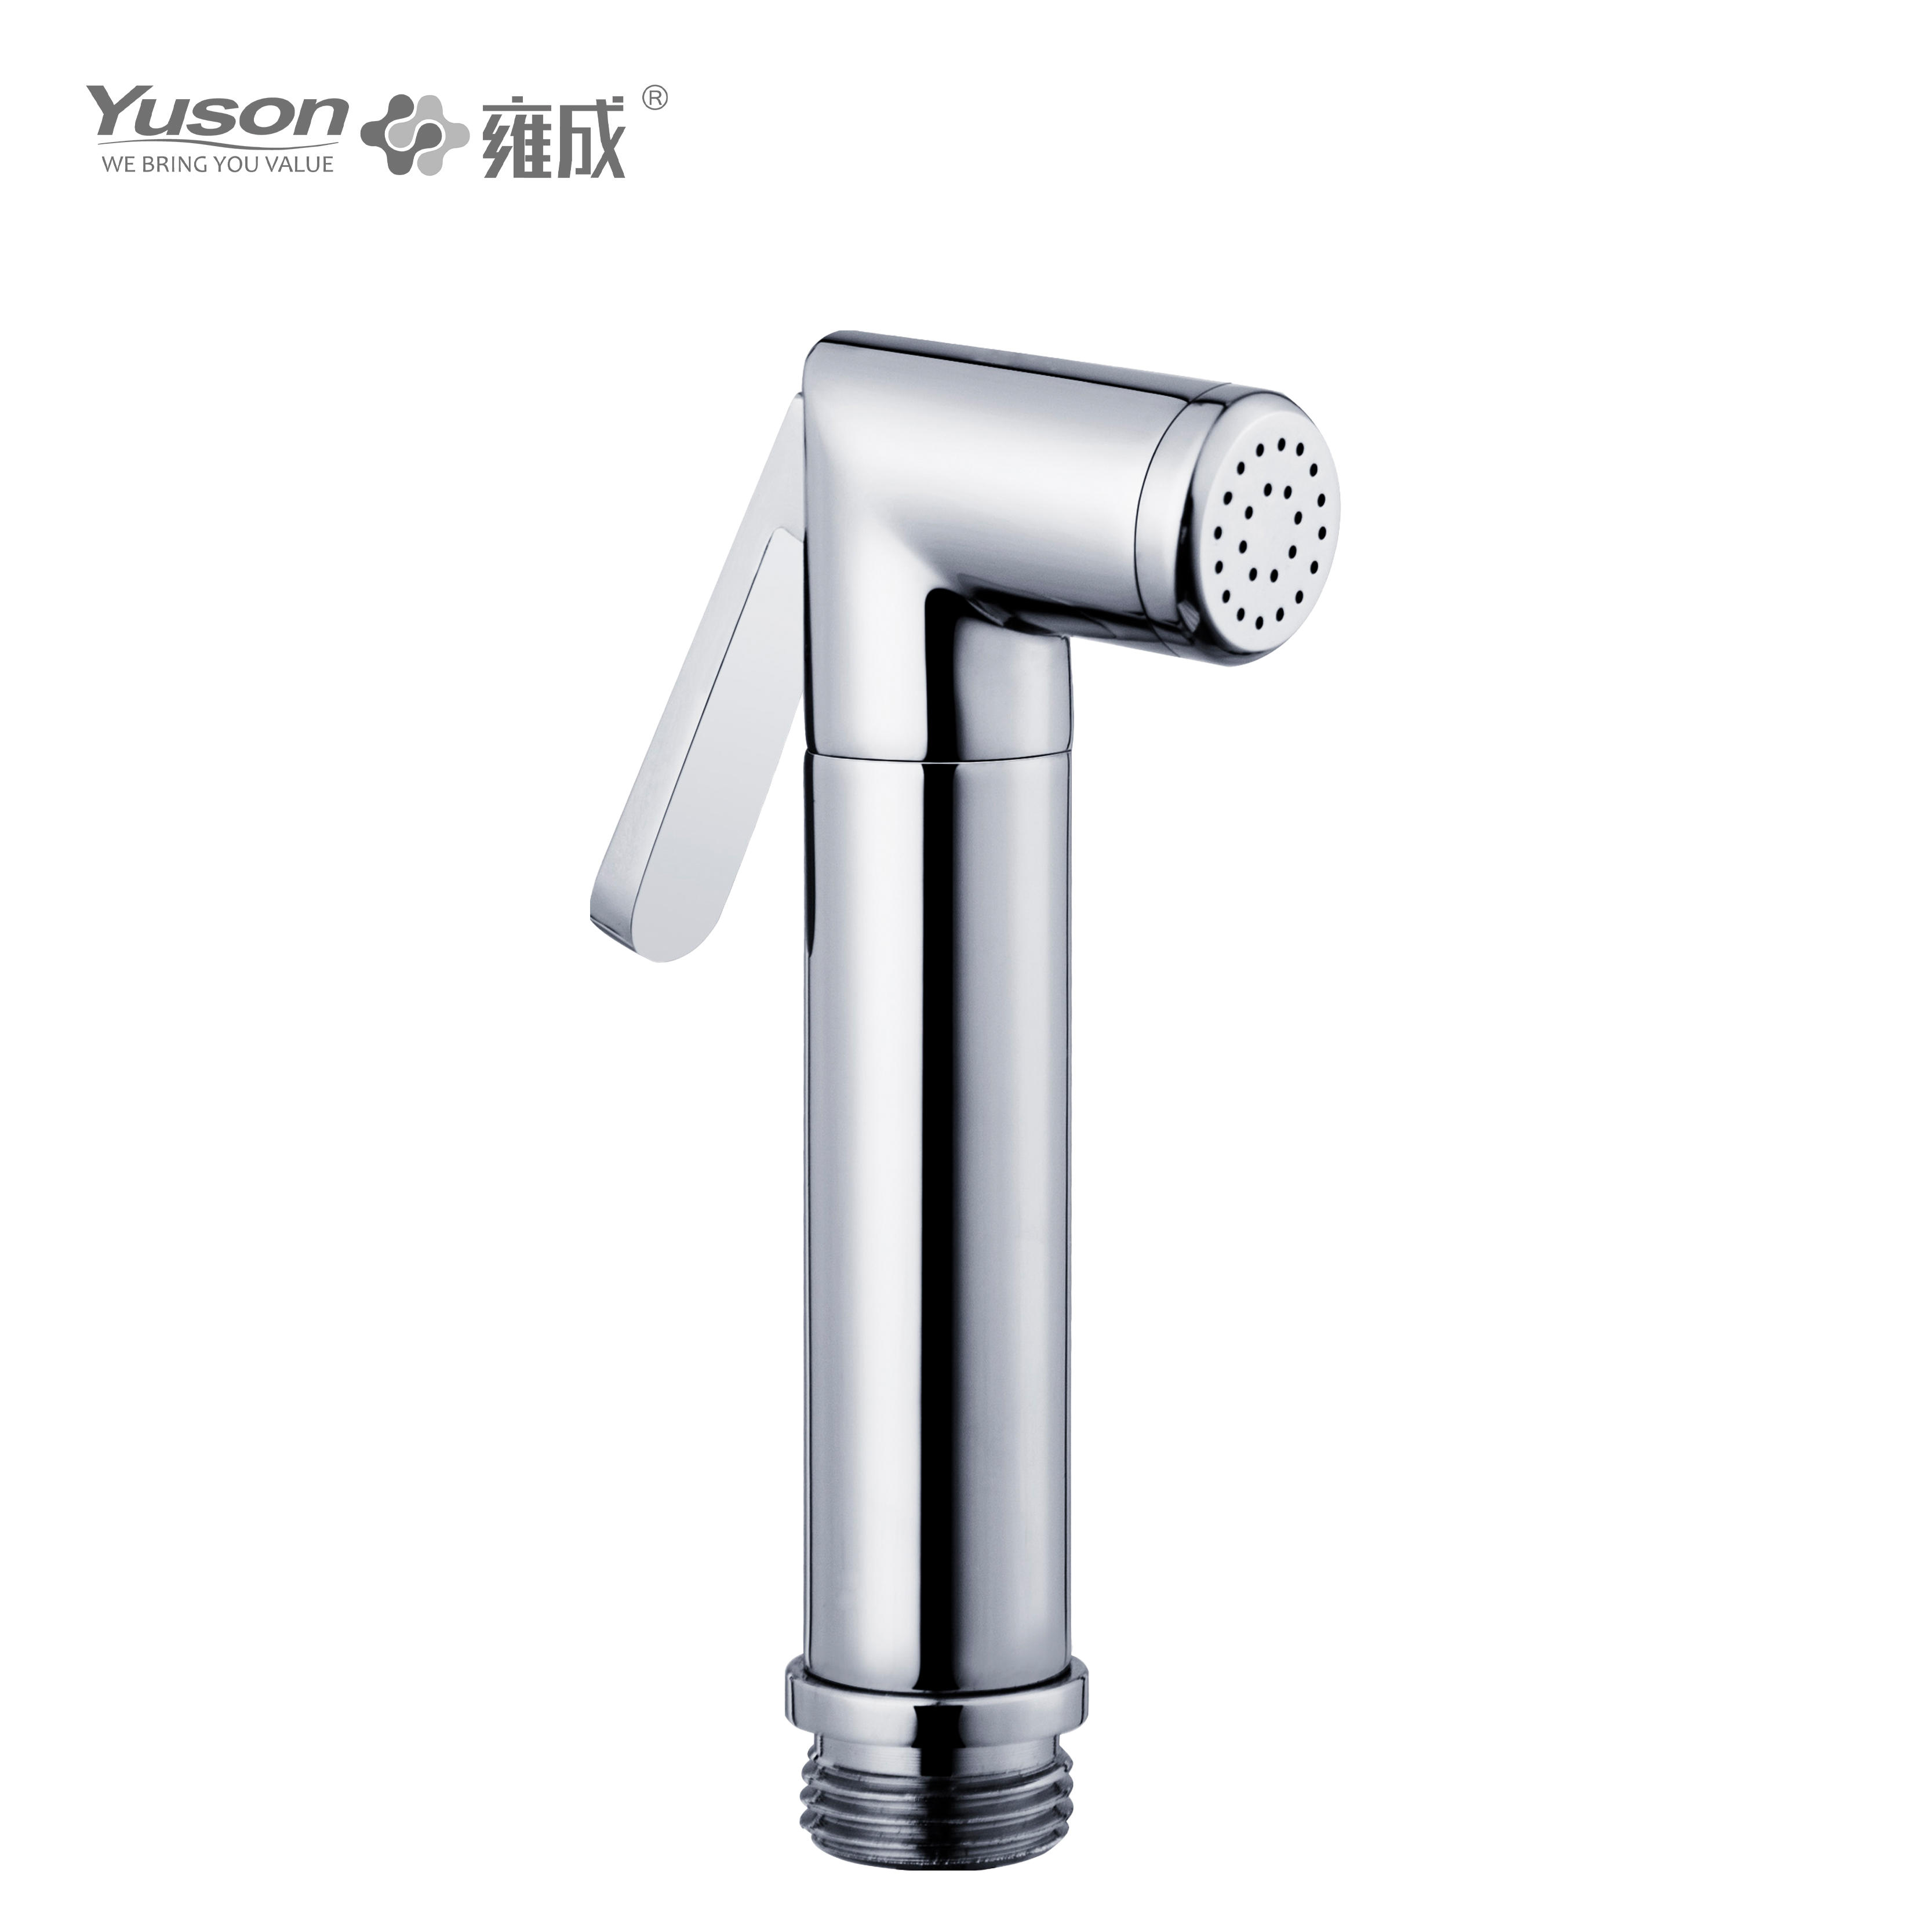 YS36419	Full Brass Handheld Toilet hygiene sprayer, Portable bidet Personal Cleansing Sprayer